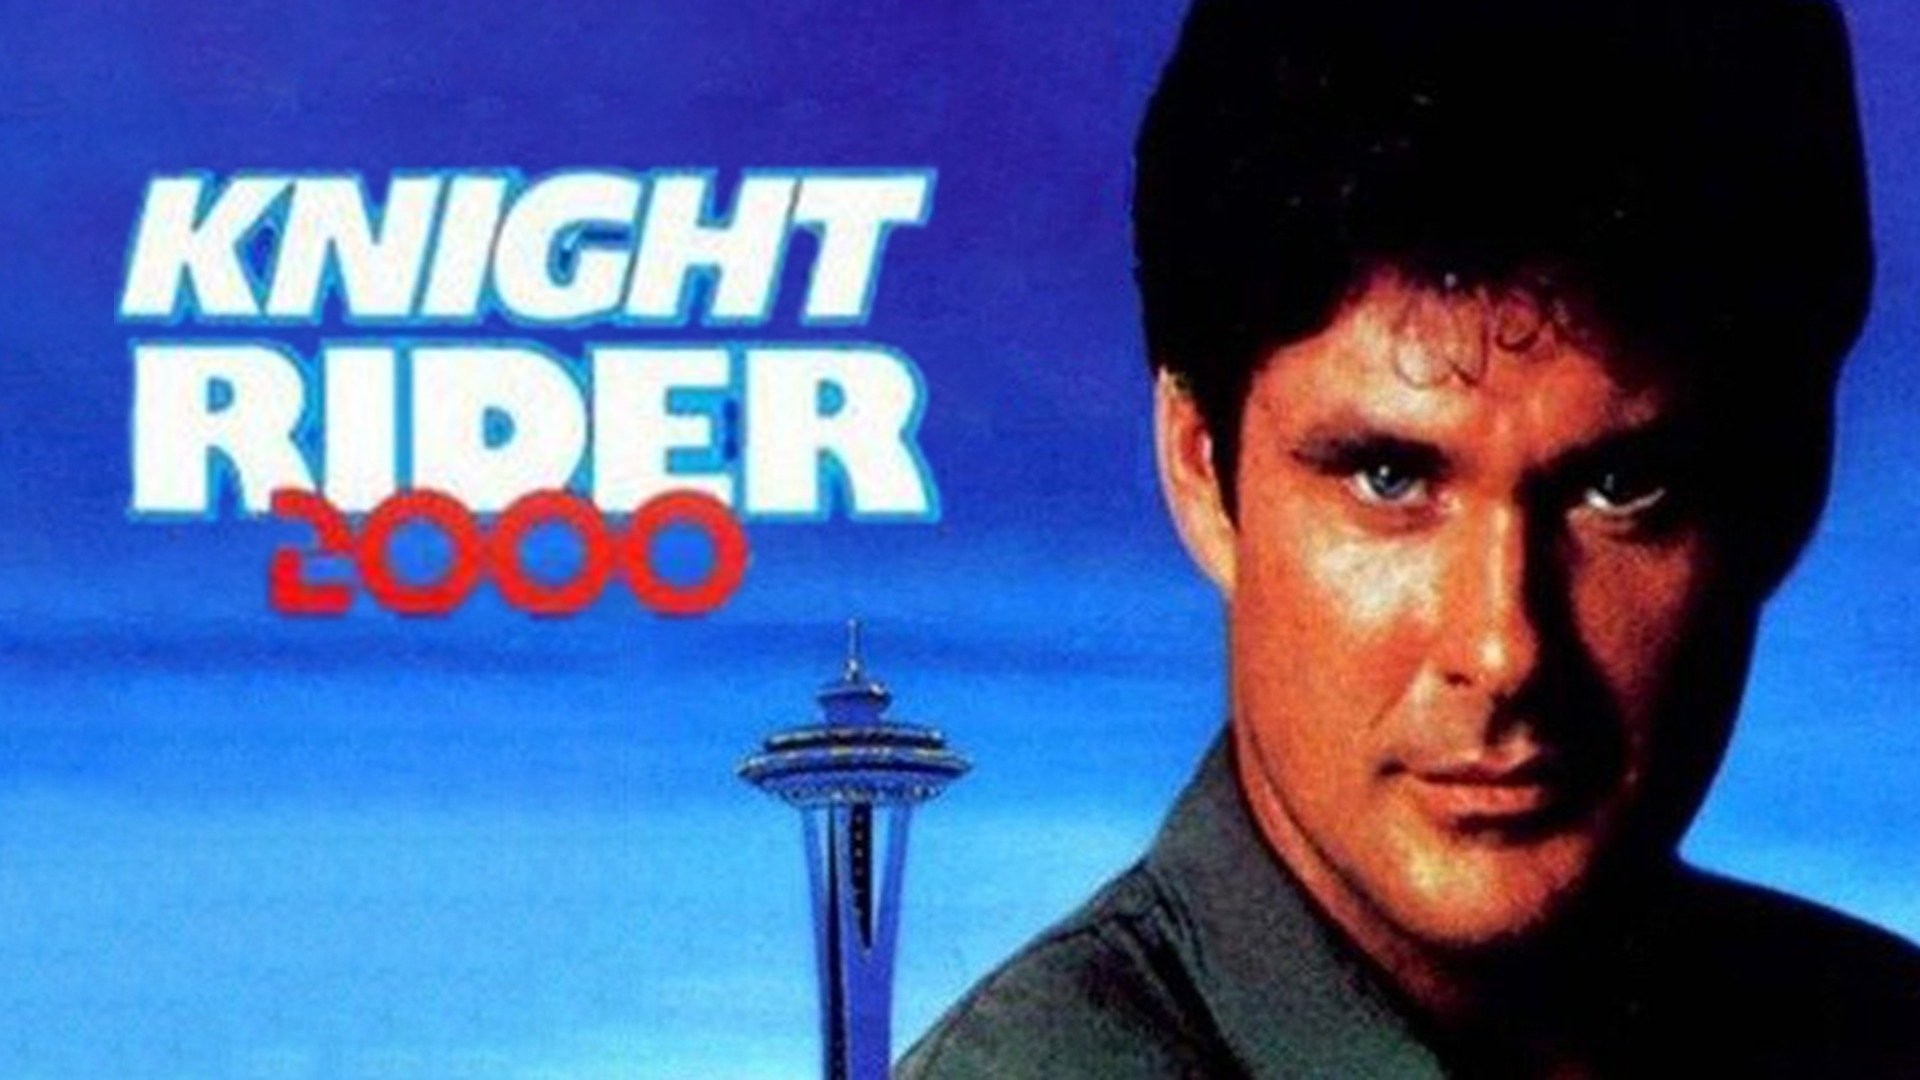 Knight Rider 2000 The Movie